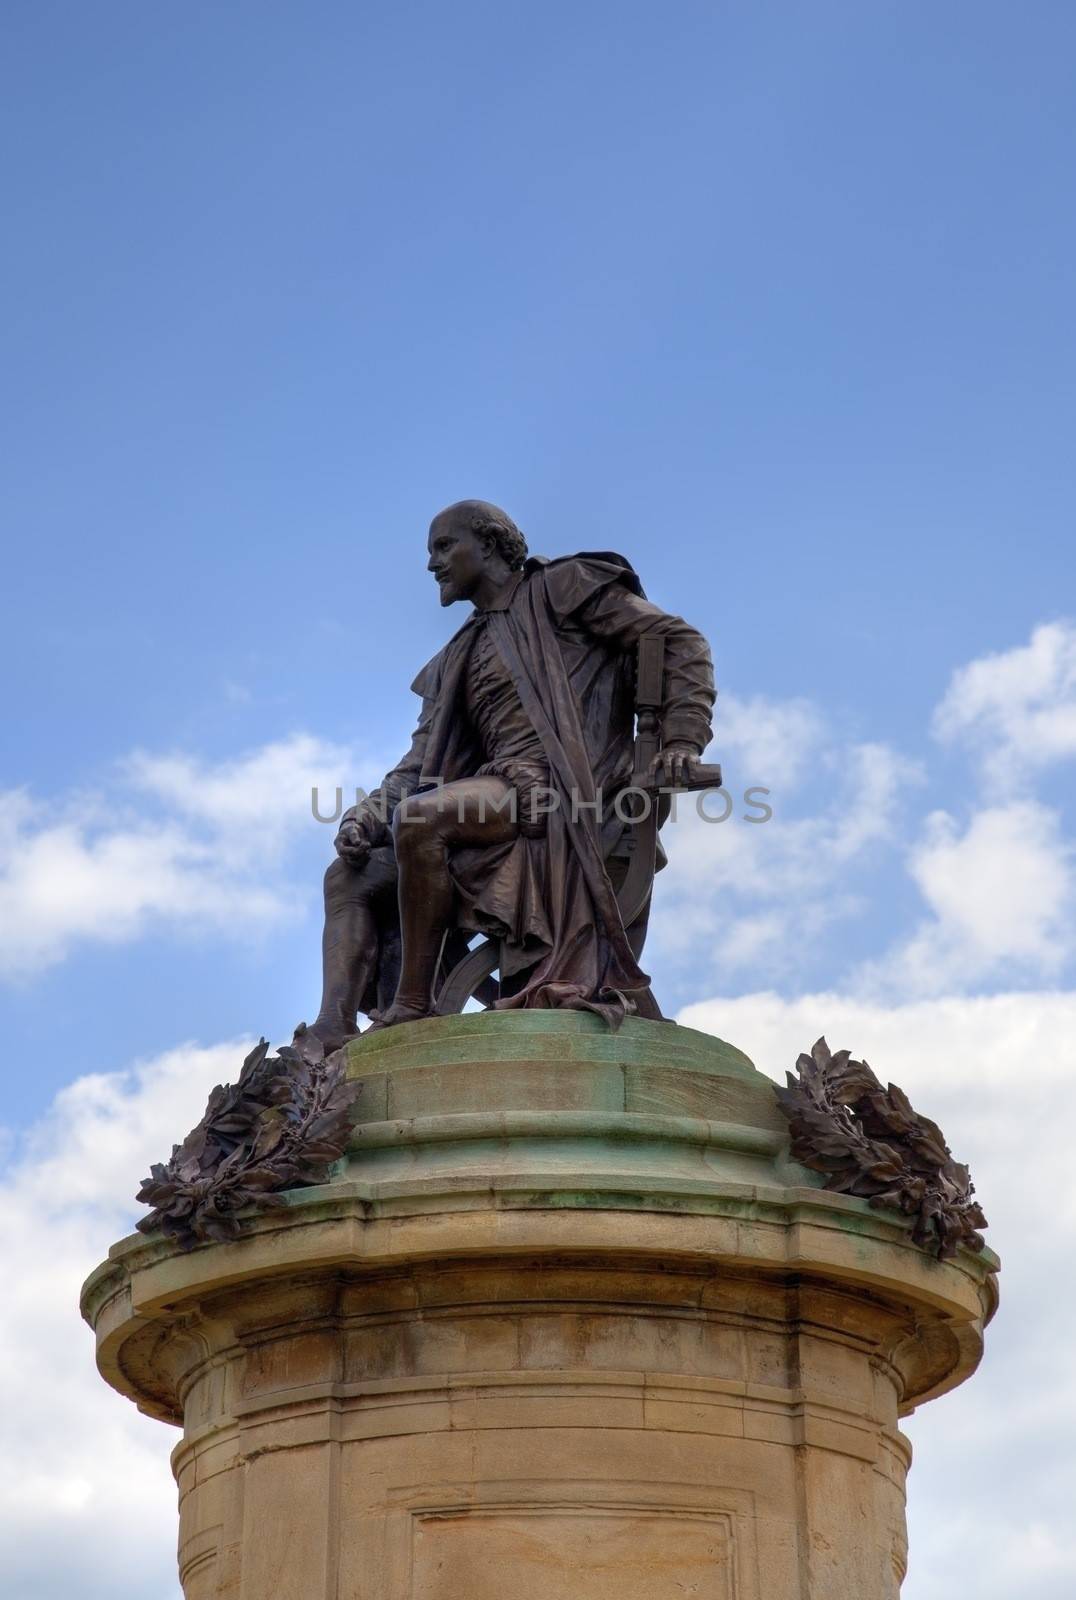 Statue of William Shakespeare, Stratford upon Avon, Warwickshire, England.